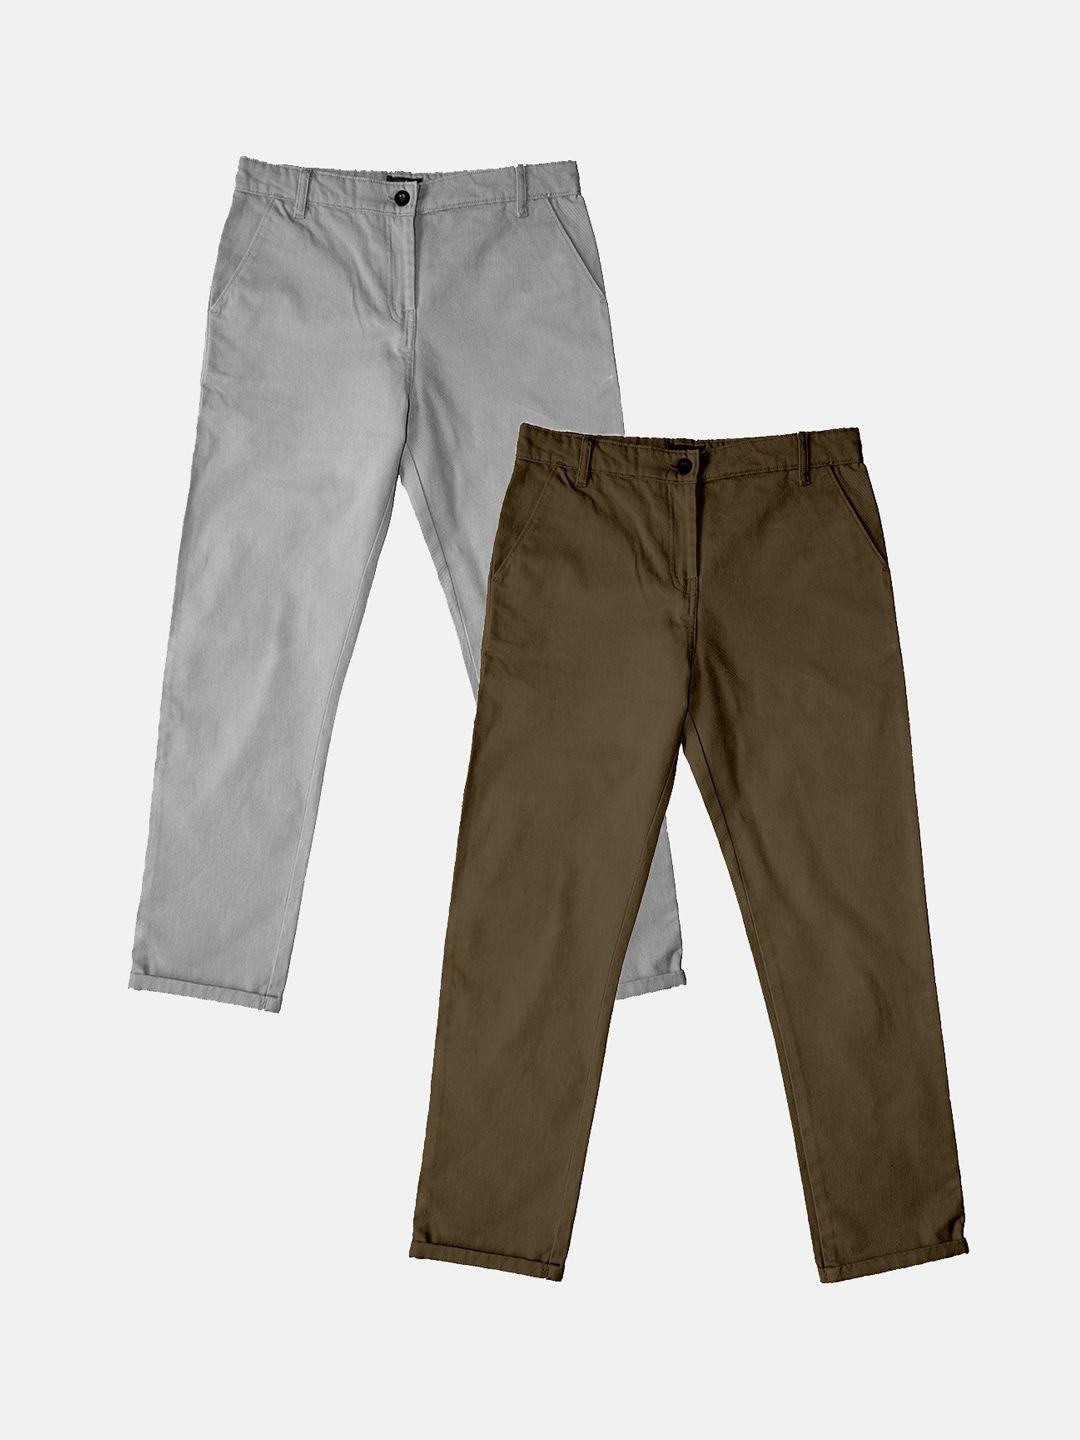 kiddopanti-boys-pack-of-2-pure-cotton-chinos-trousers